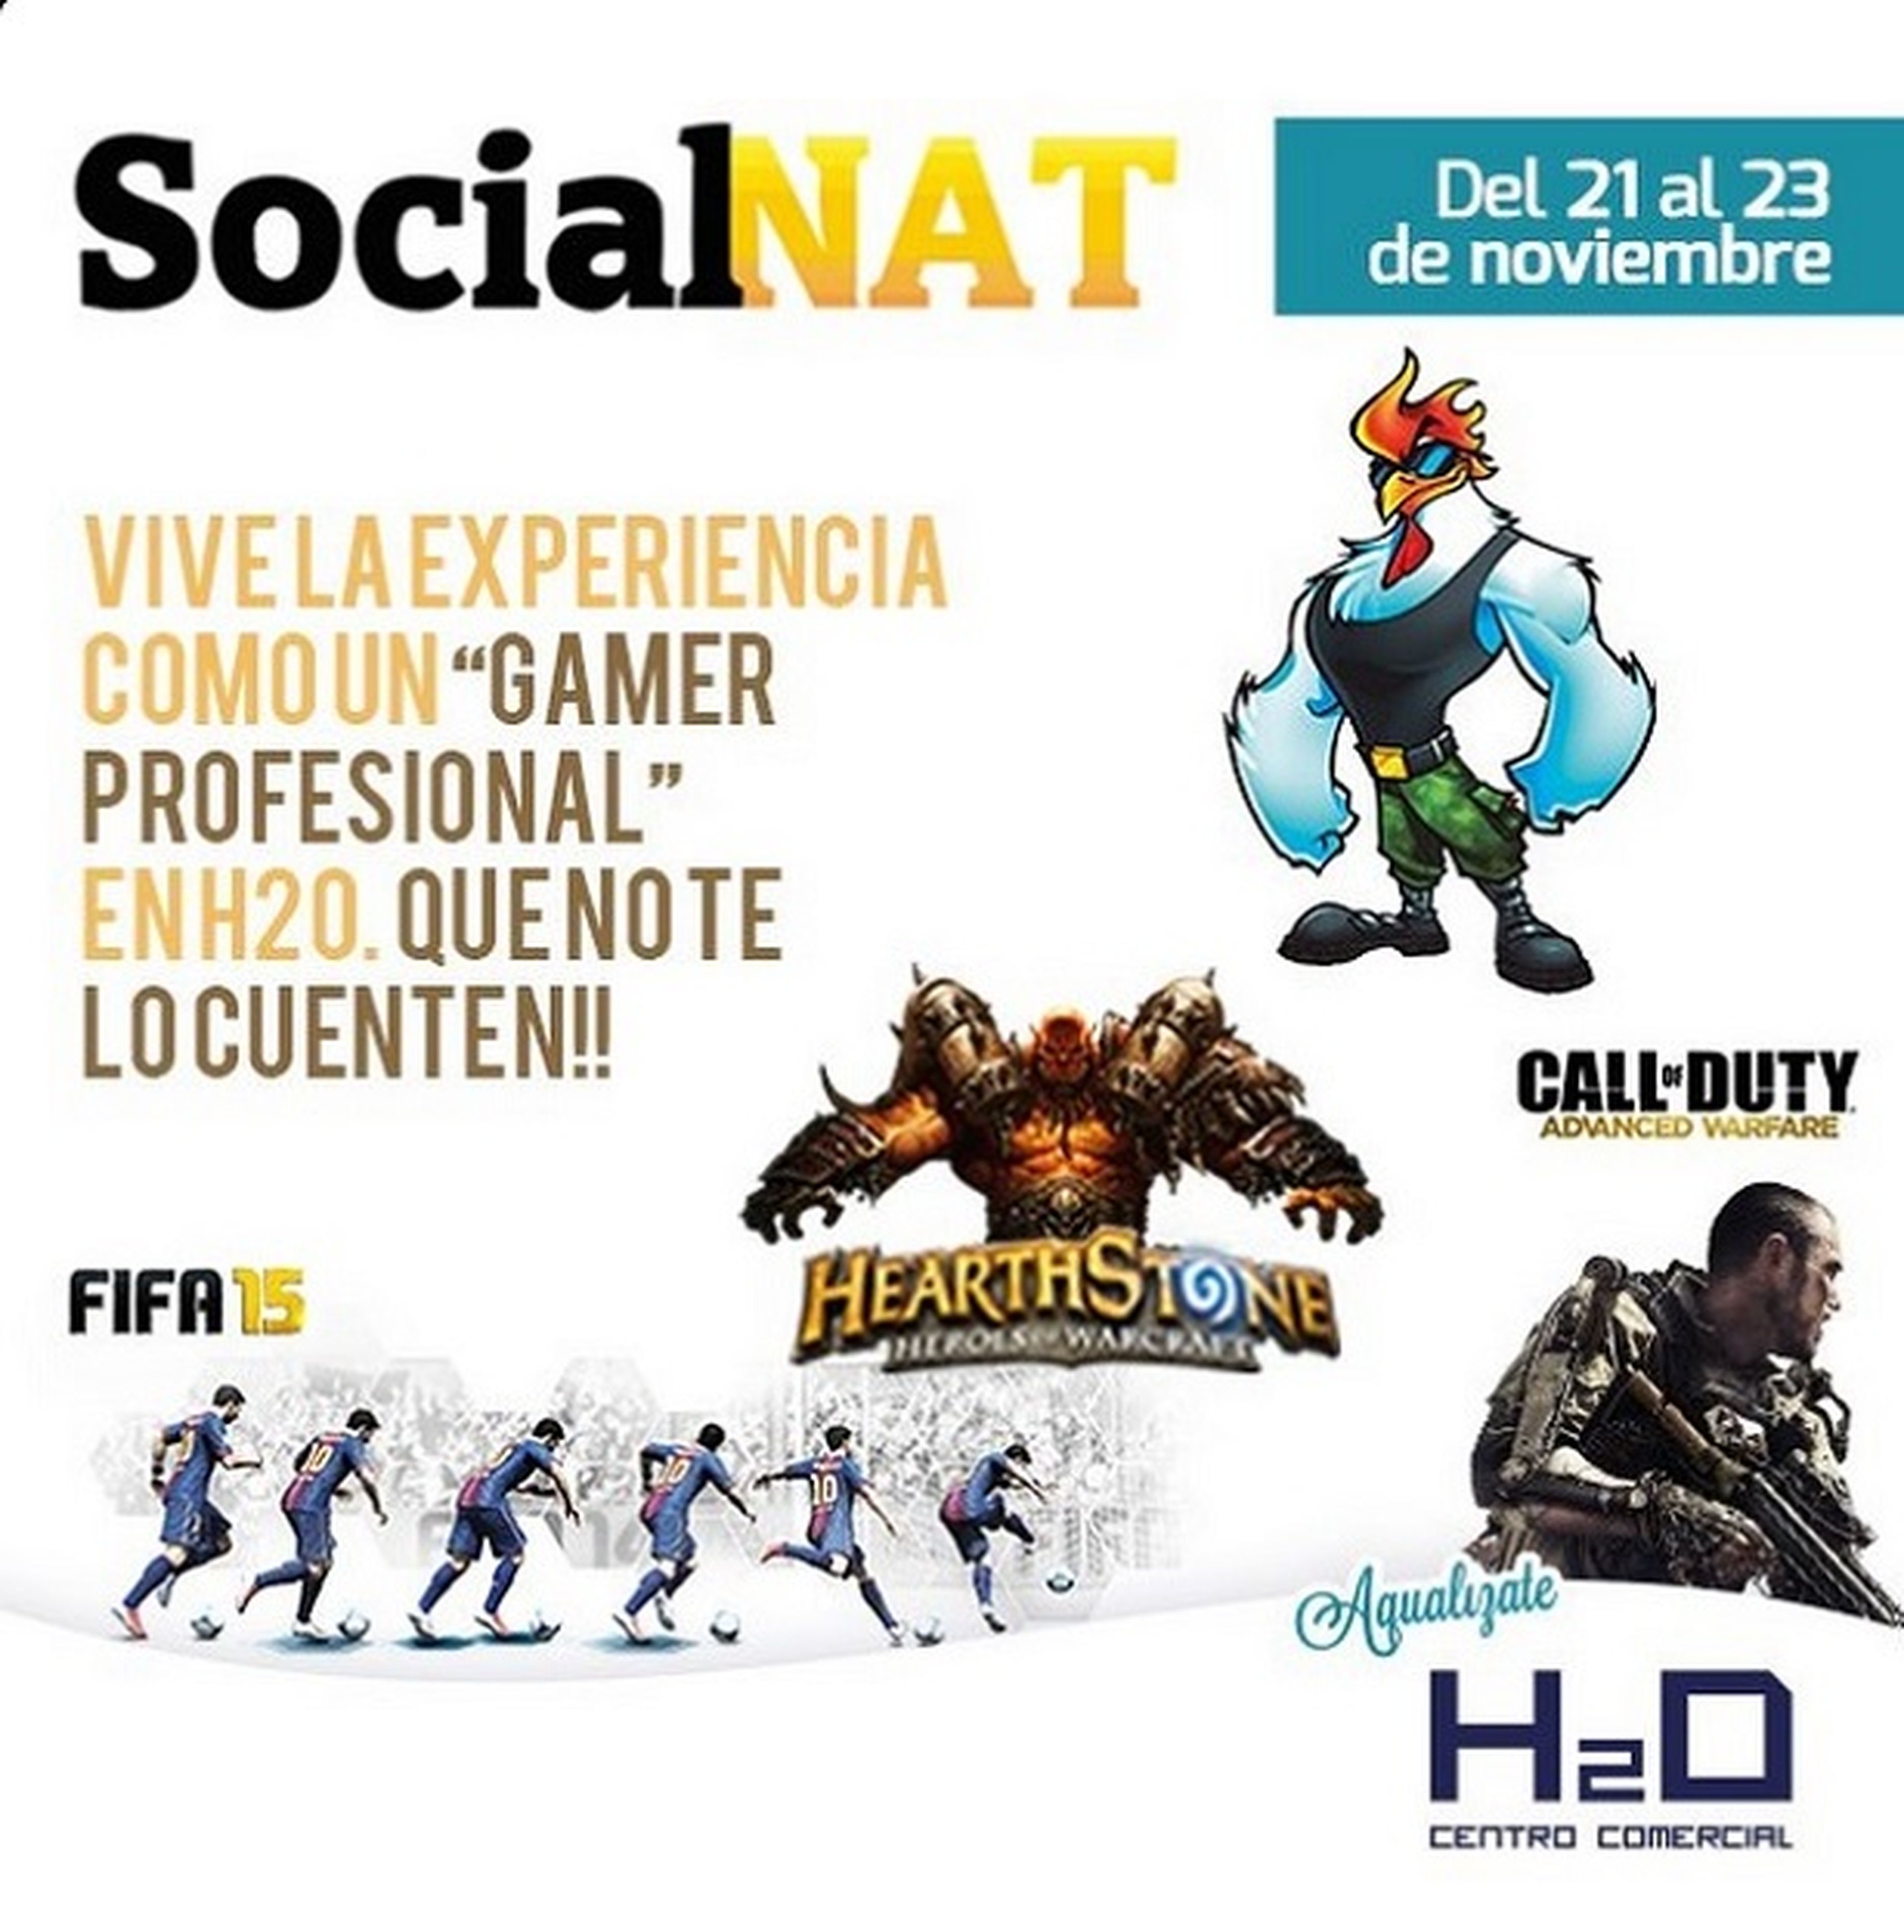 SocialNAT organiza en Madrid un fin de semana eSports para todos